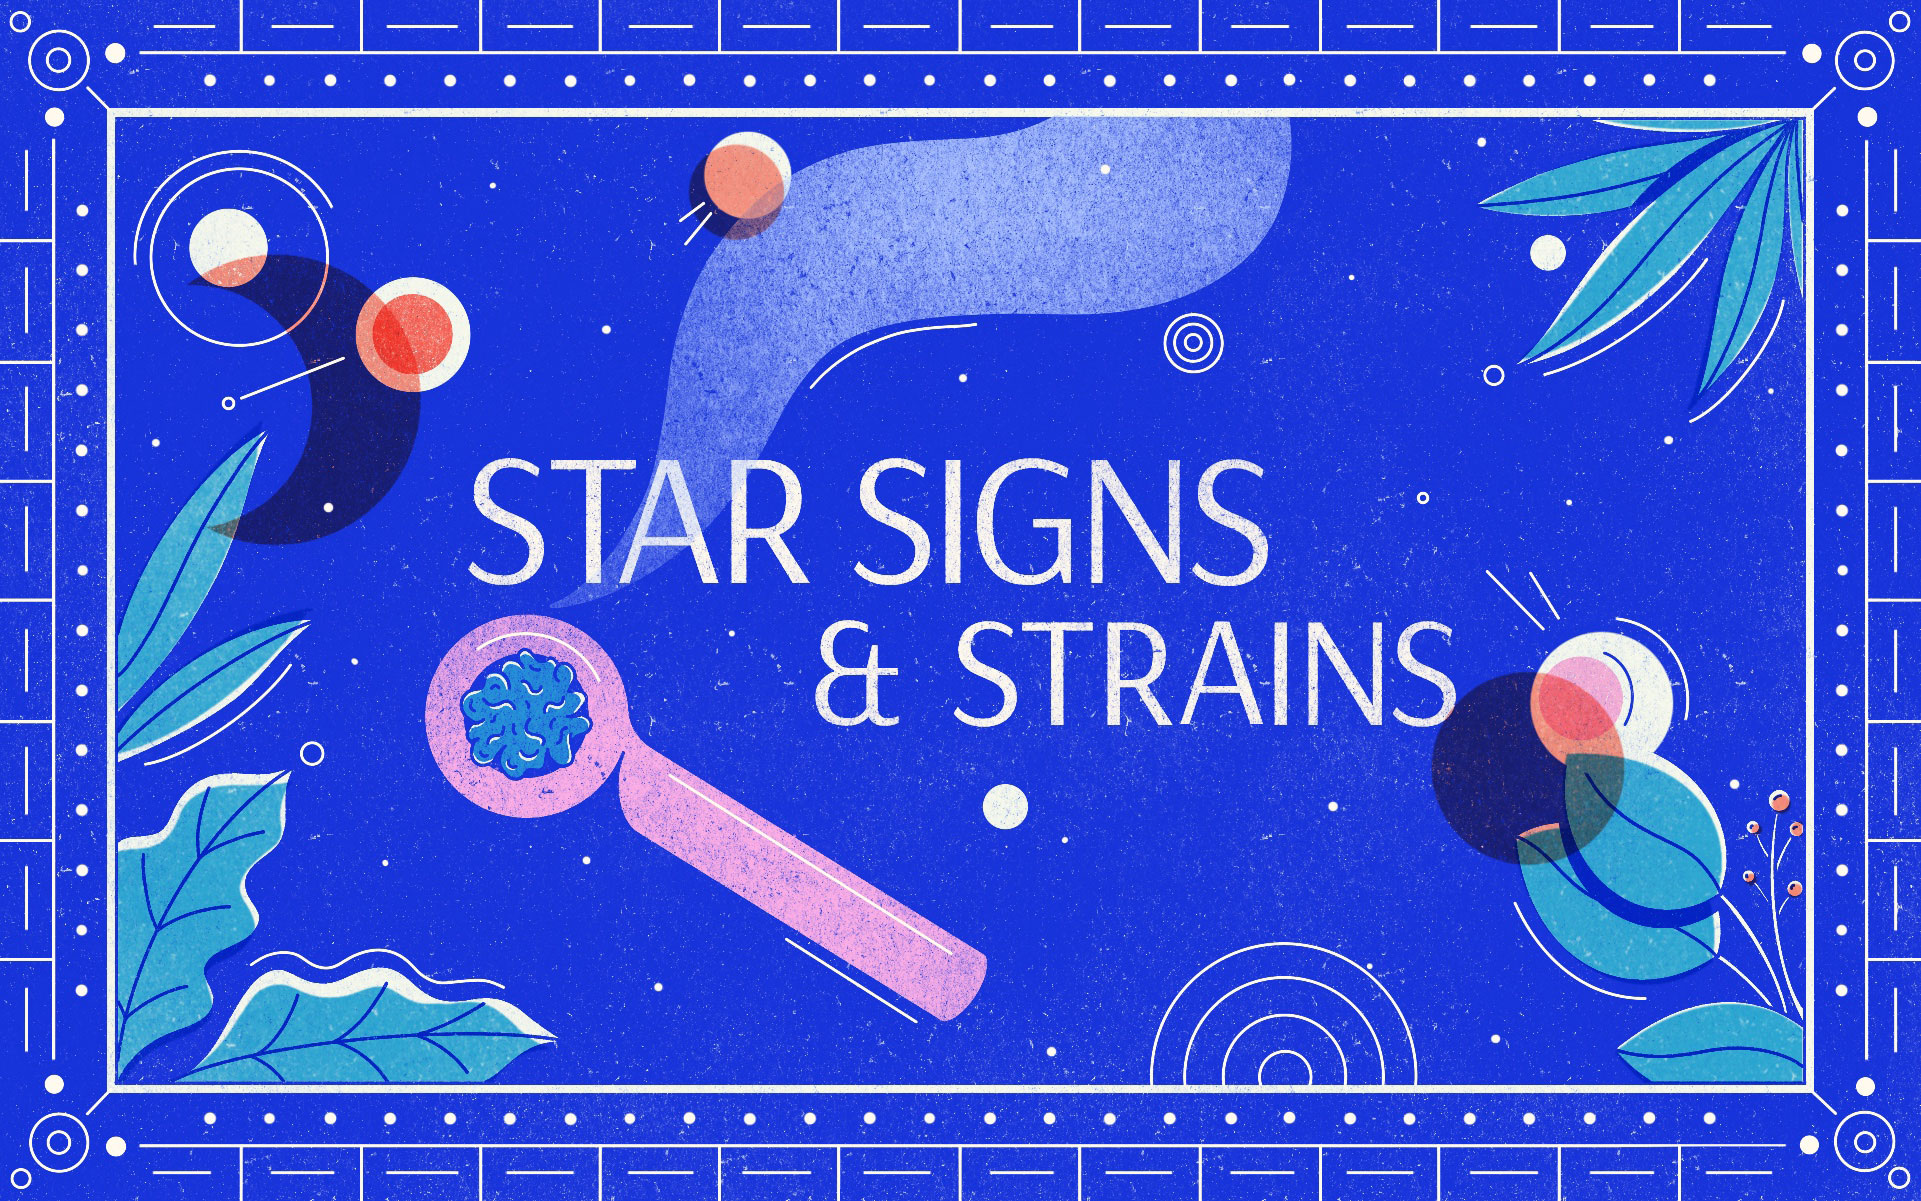 Star signs and cannabis strains: May 2021 horoscopes